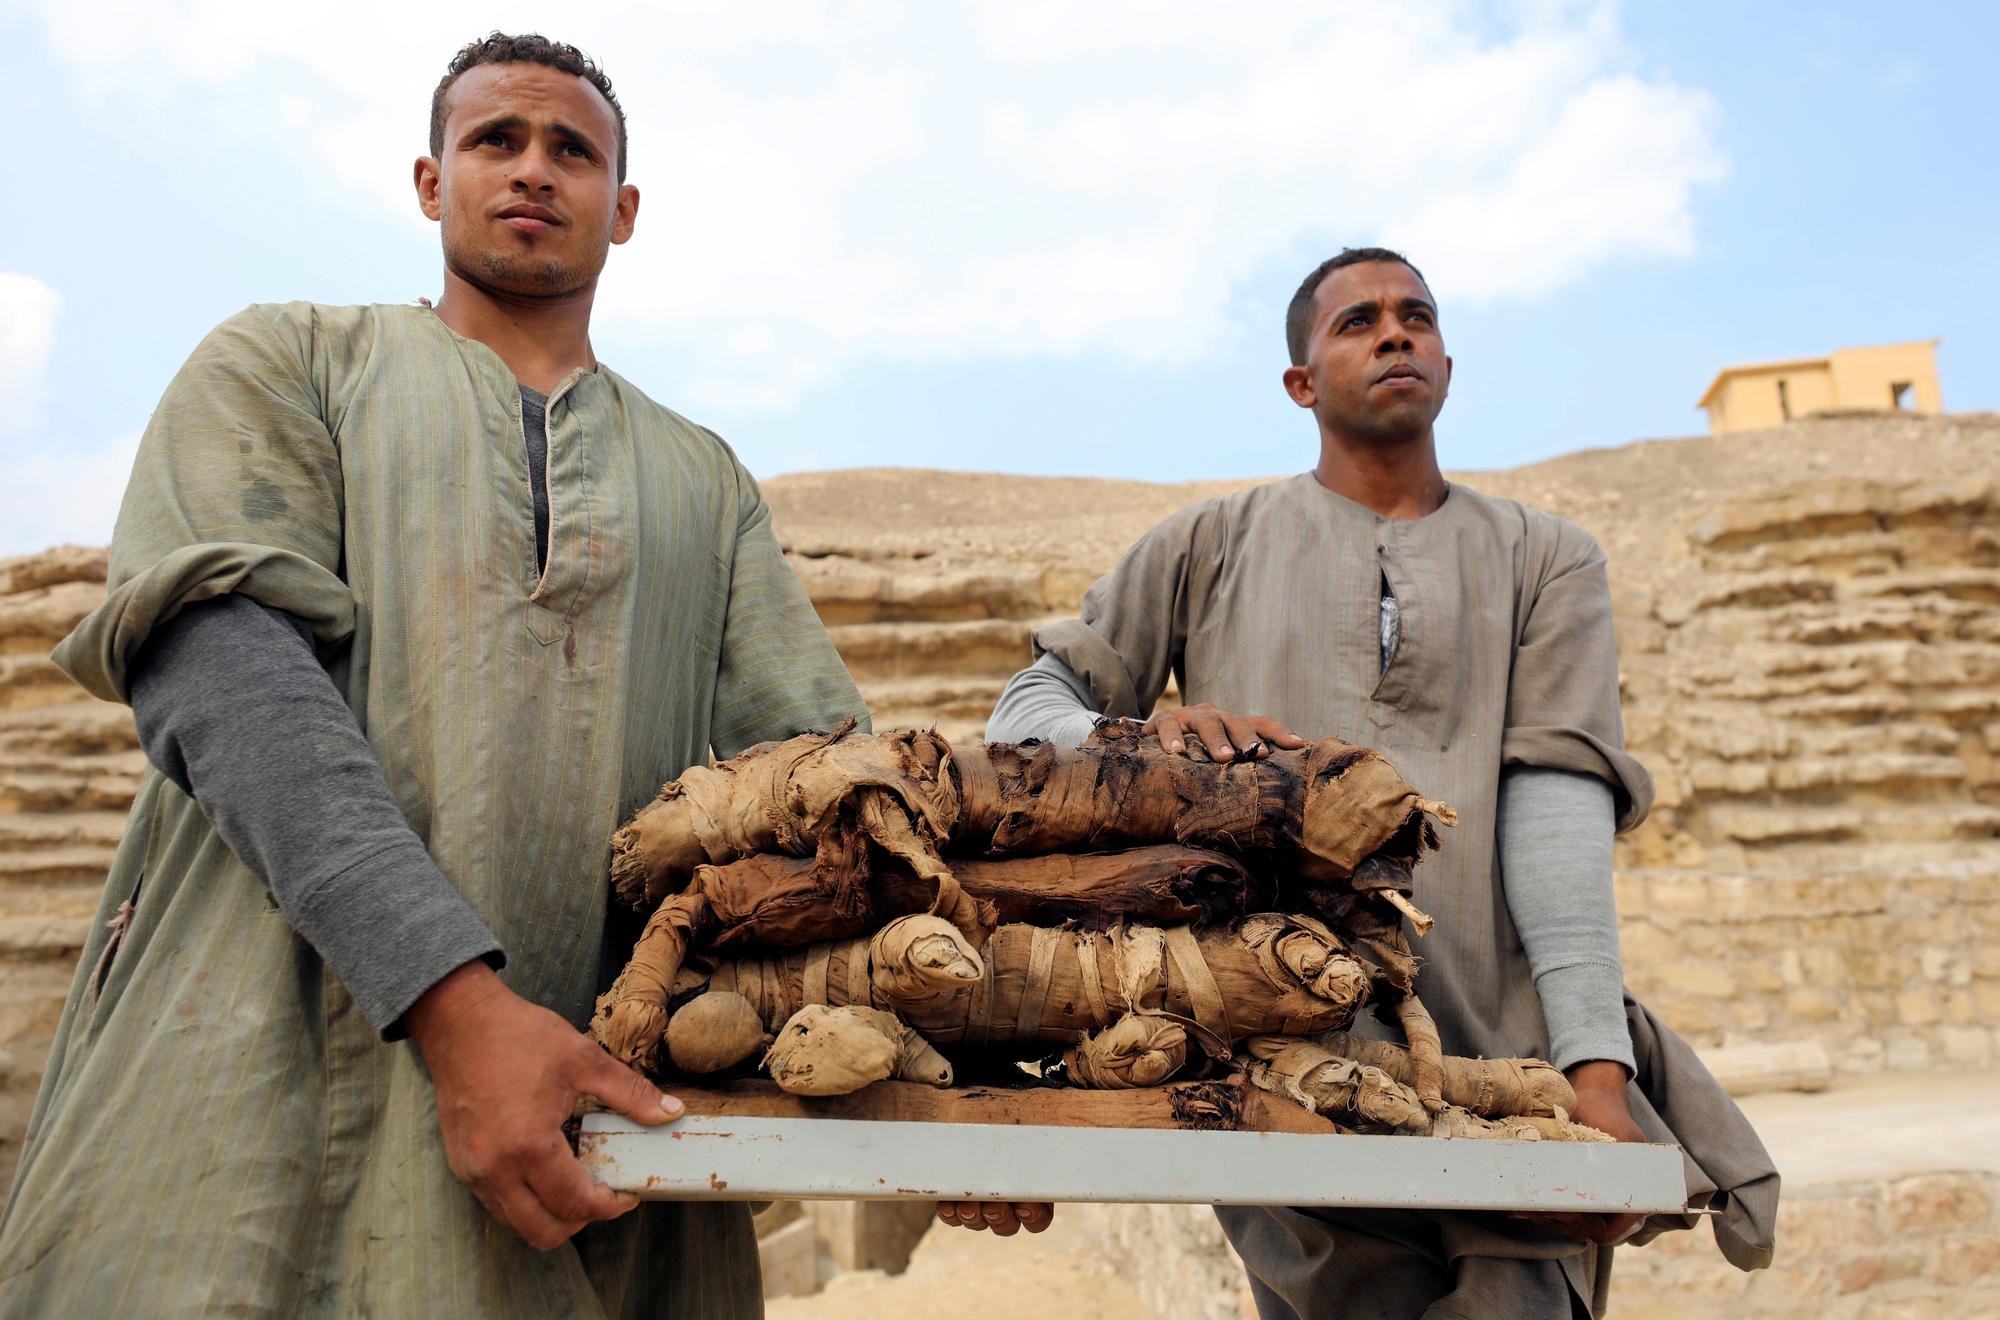 Les momies de chats sont extraites de la nécropole de Saqqarah, en Egypte. [Reuters - Mohamed Abd El Ghany]